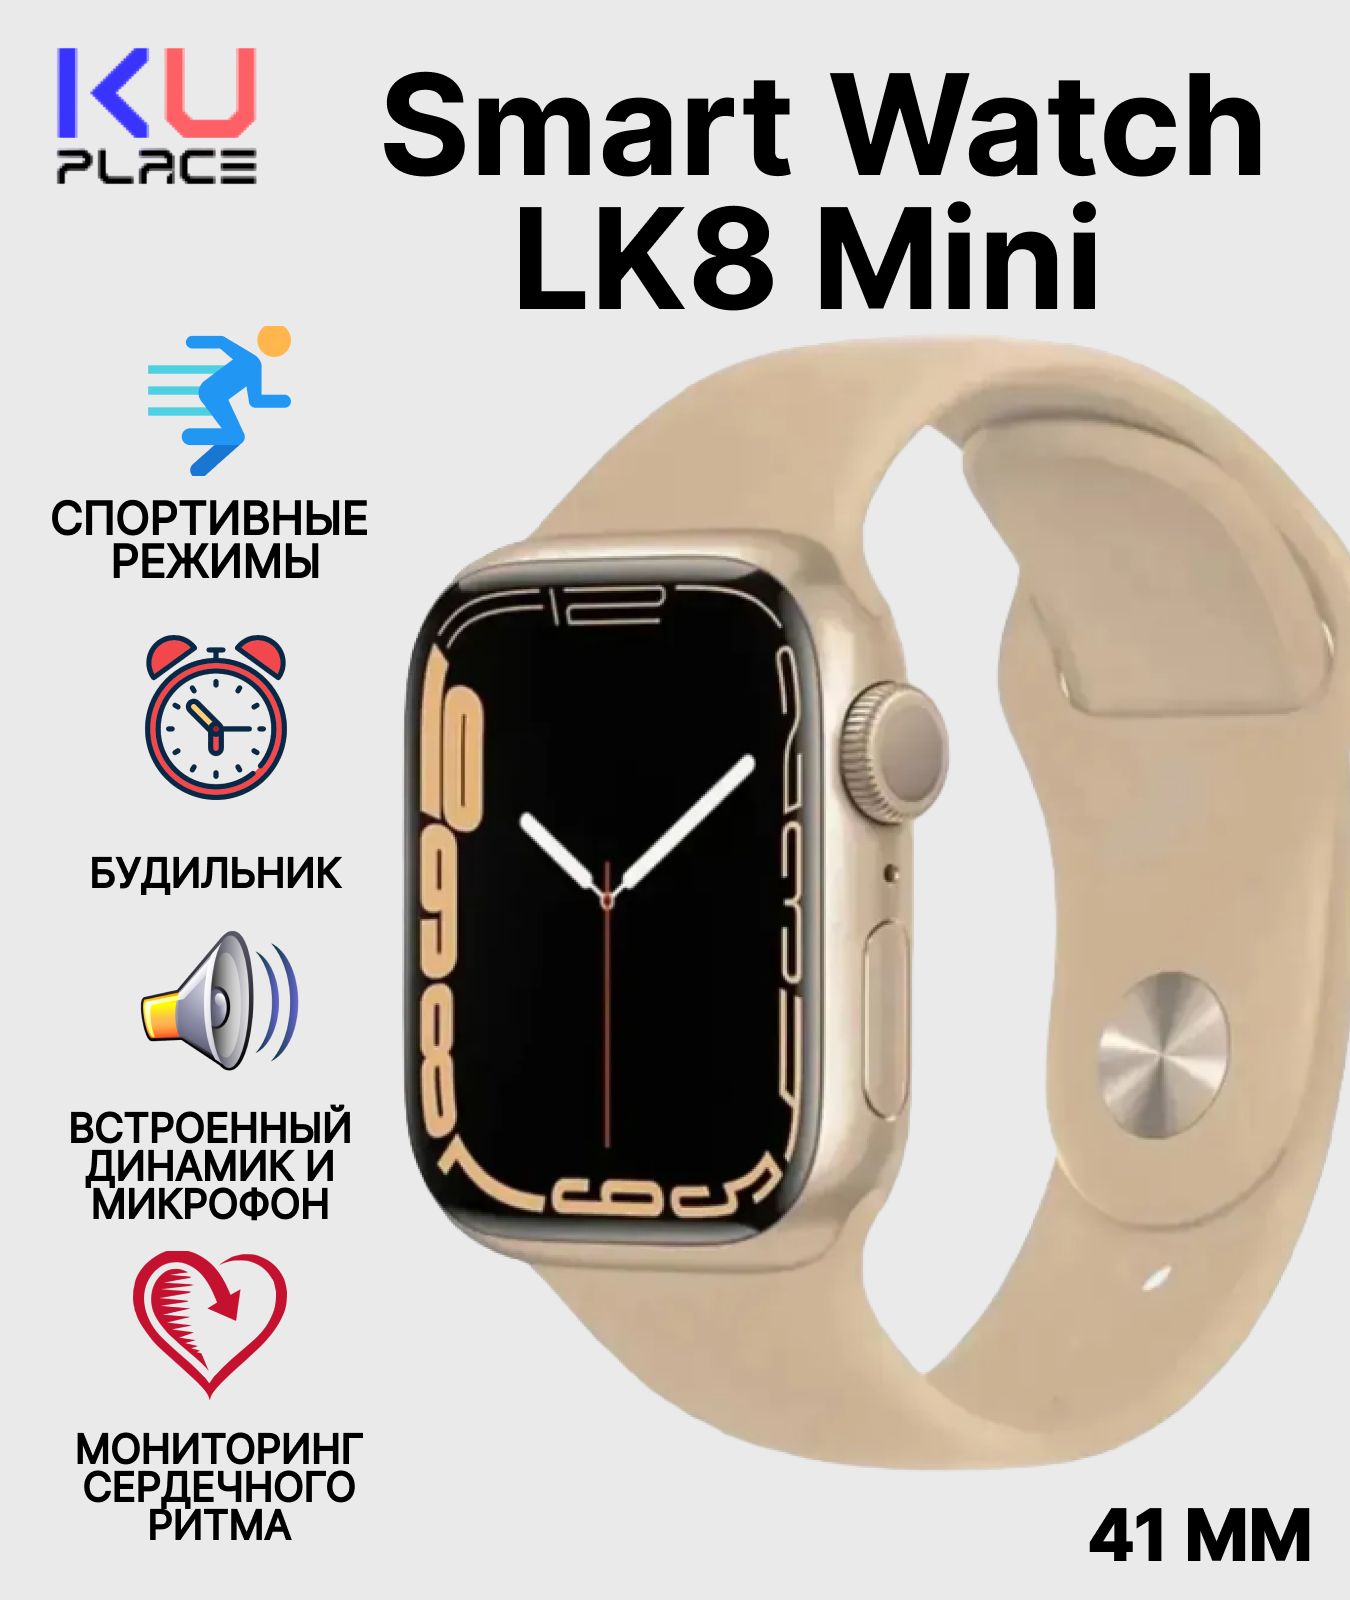 Часы lk 8 mini. Lk8 Mini. LK 8 Mini смарт часы. LK 8 Pro смарт часы. Умные часы lk8 Mini функционал.